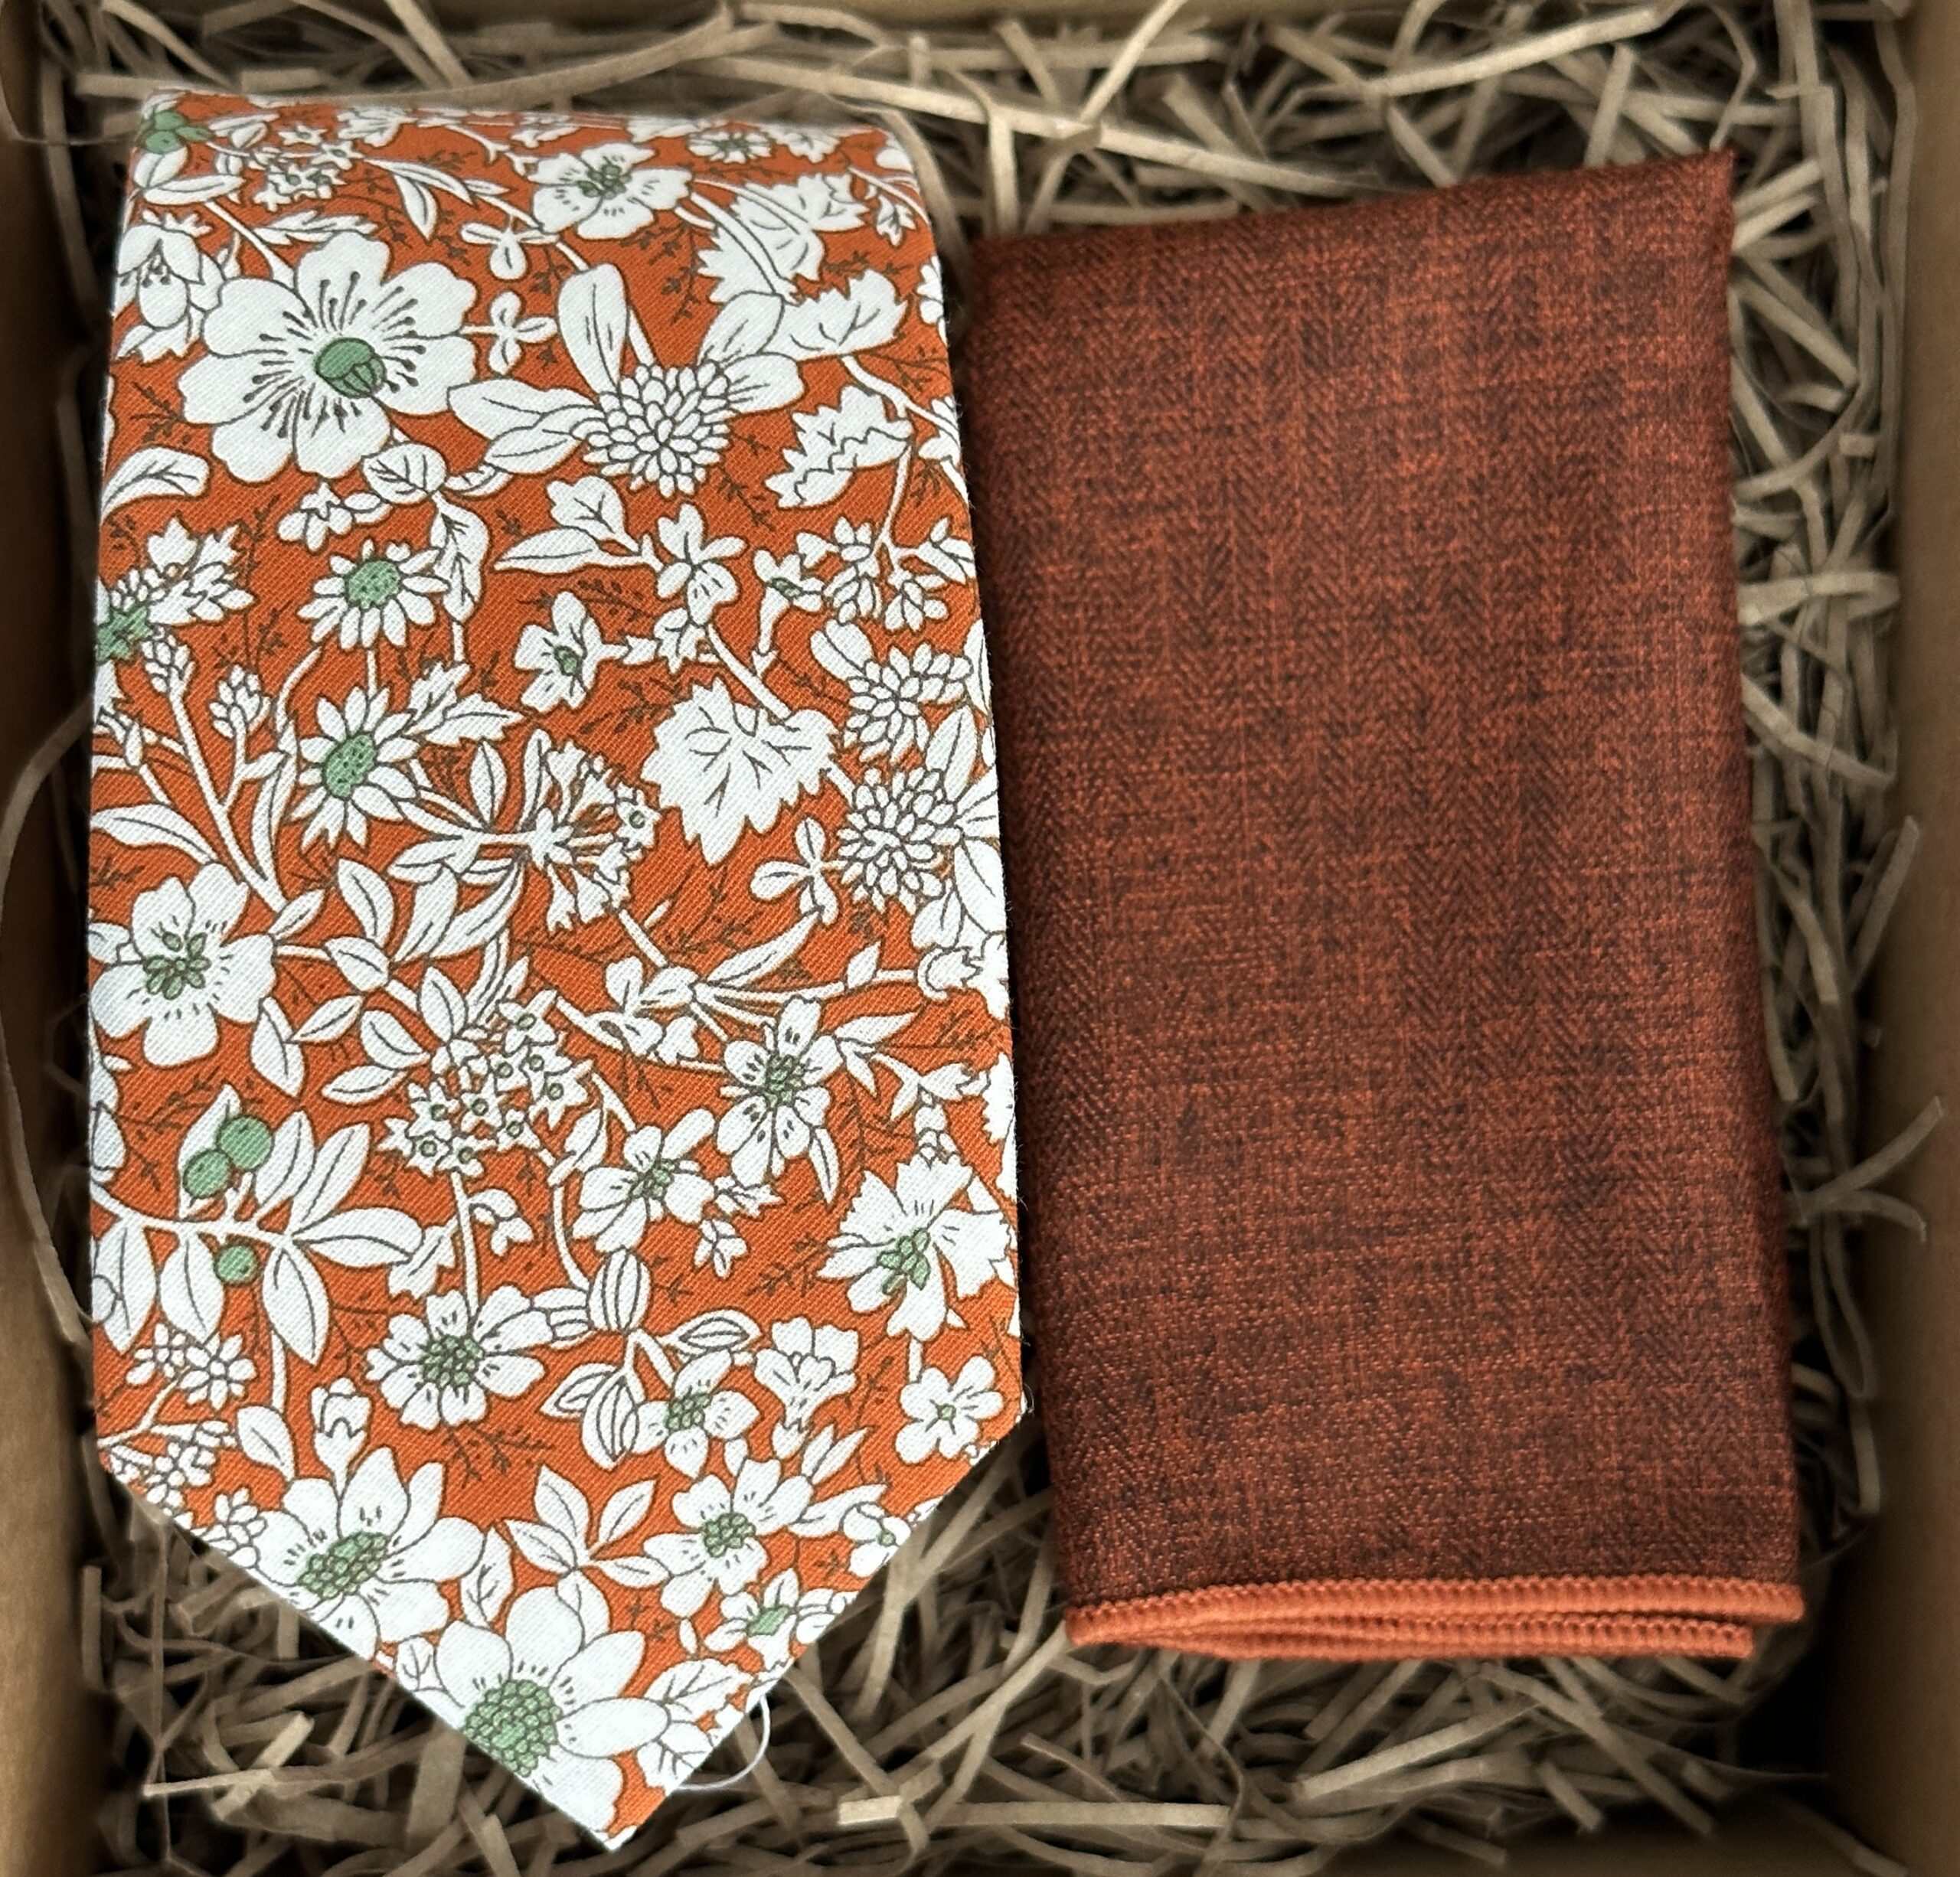 A photo of an orange floral tie and burnt orange pocket square